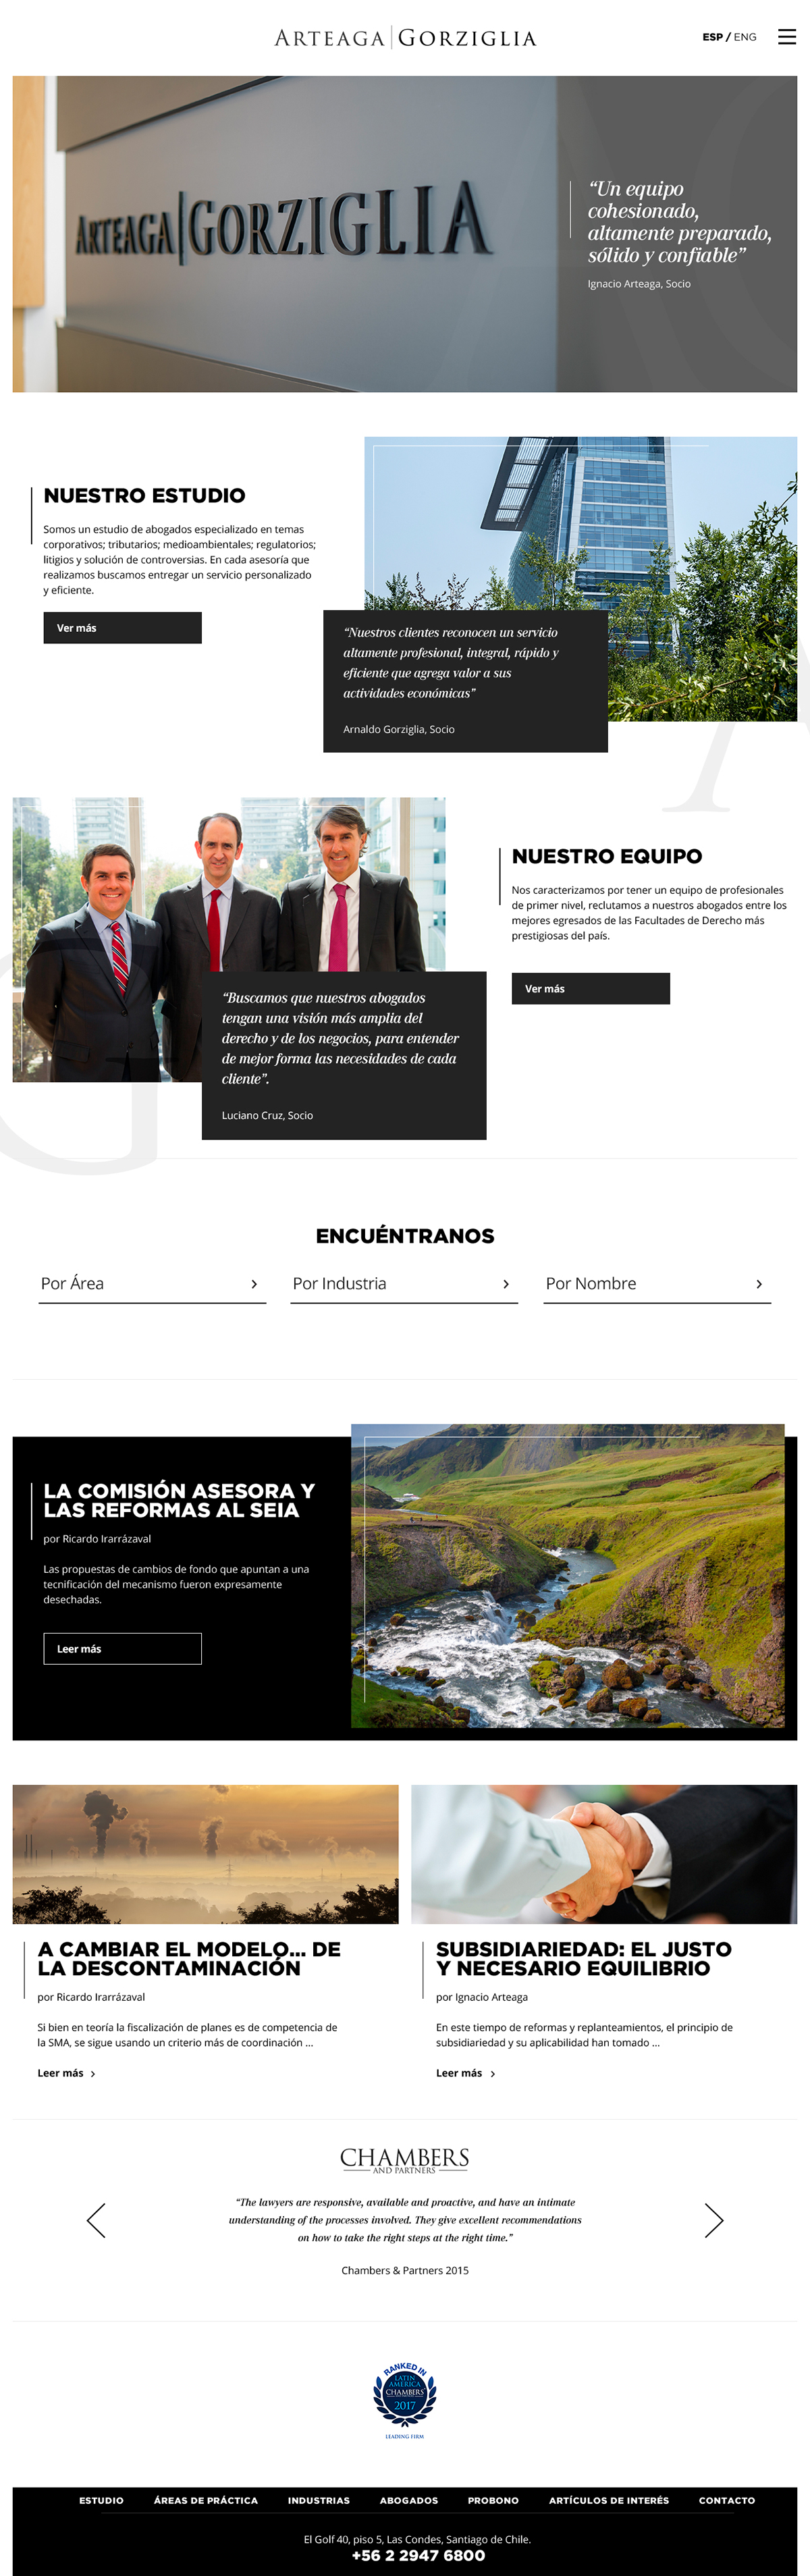 abogados leyes LAWS lawyers firm enterprise empresas chile